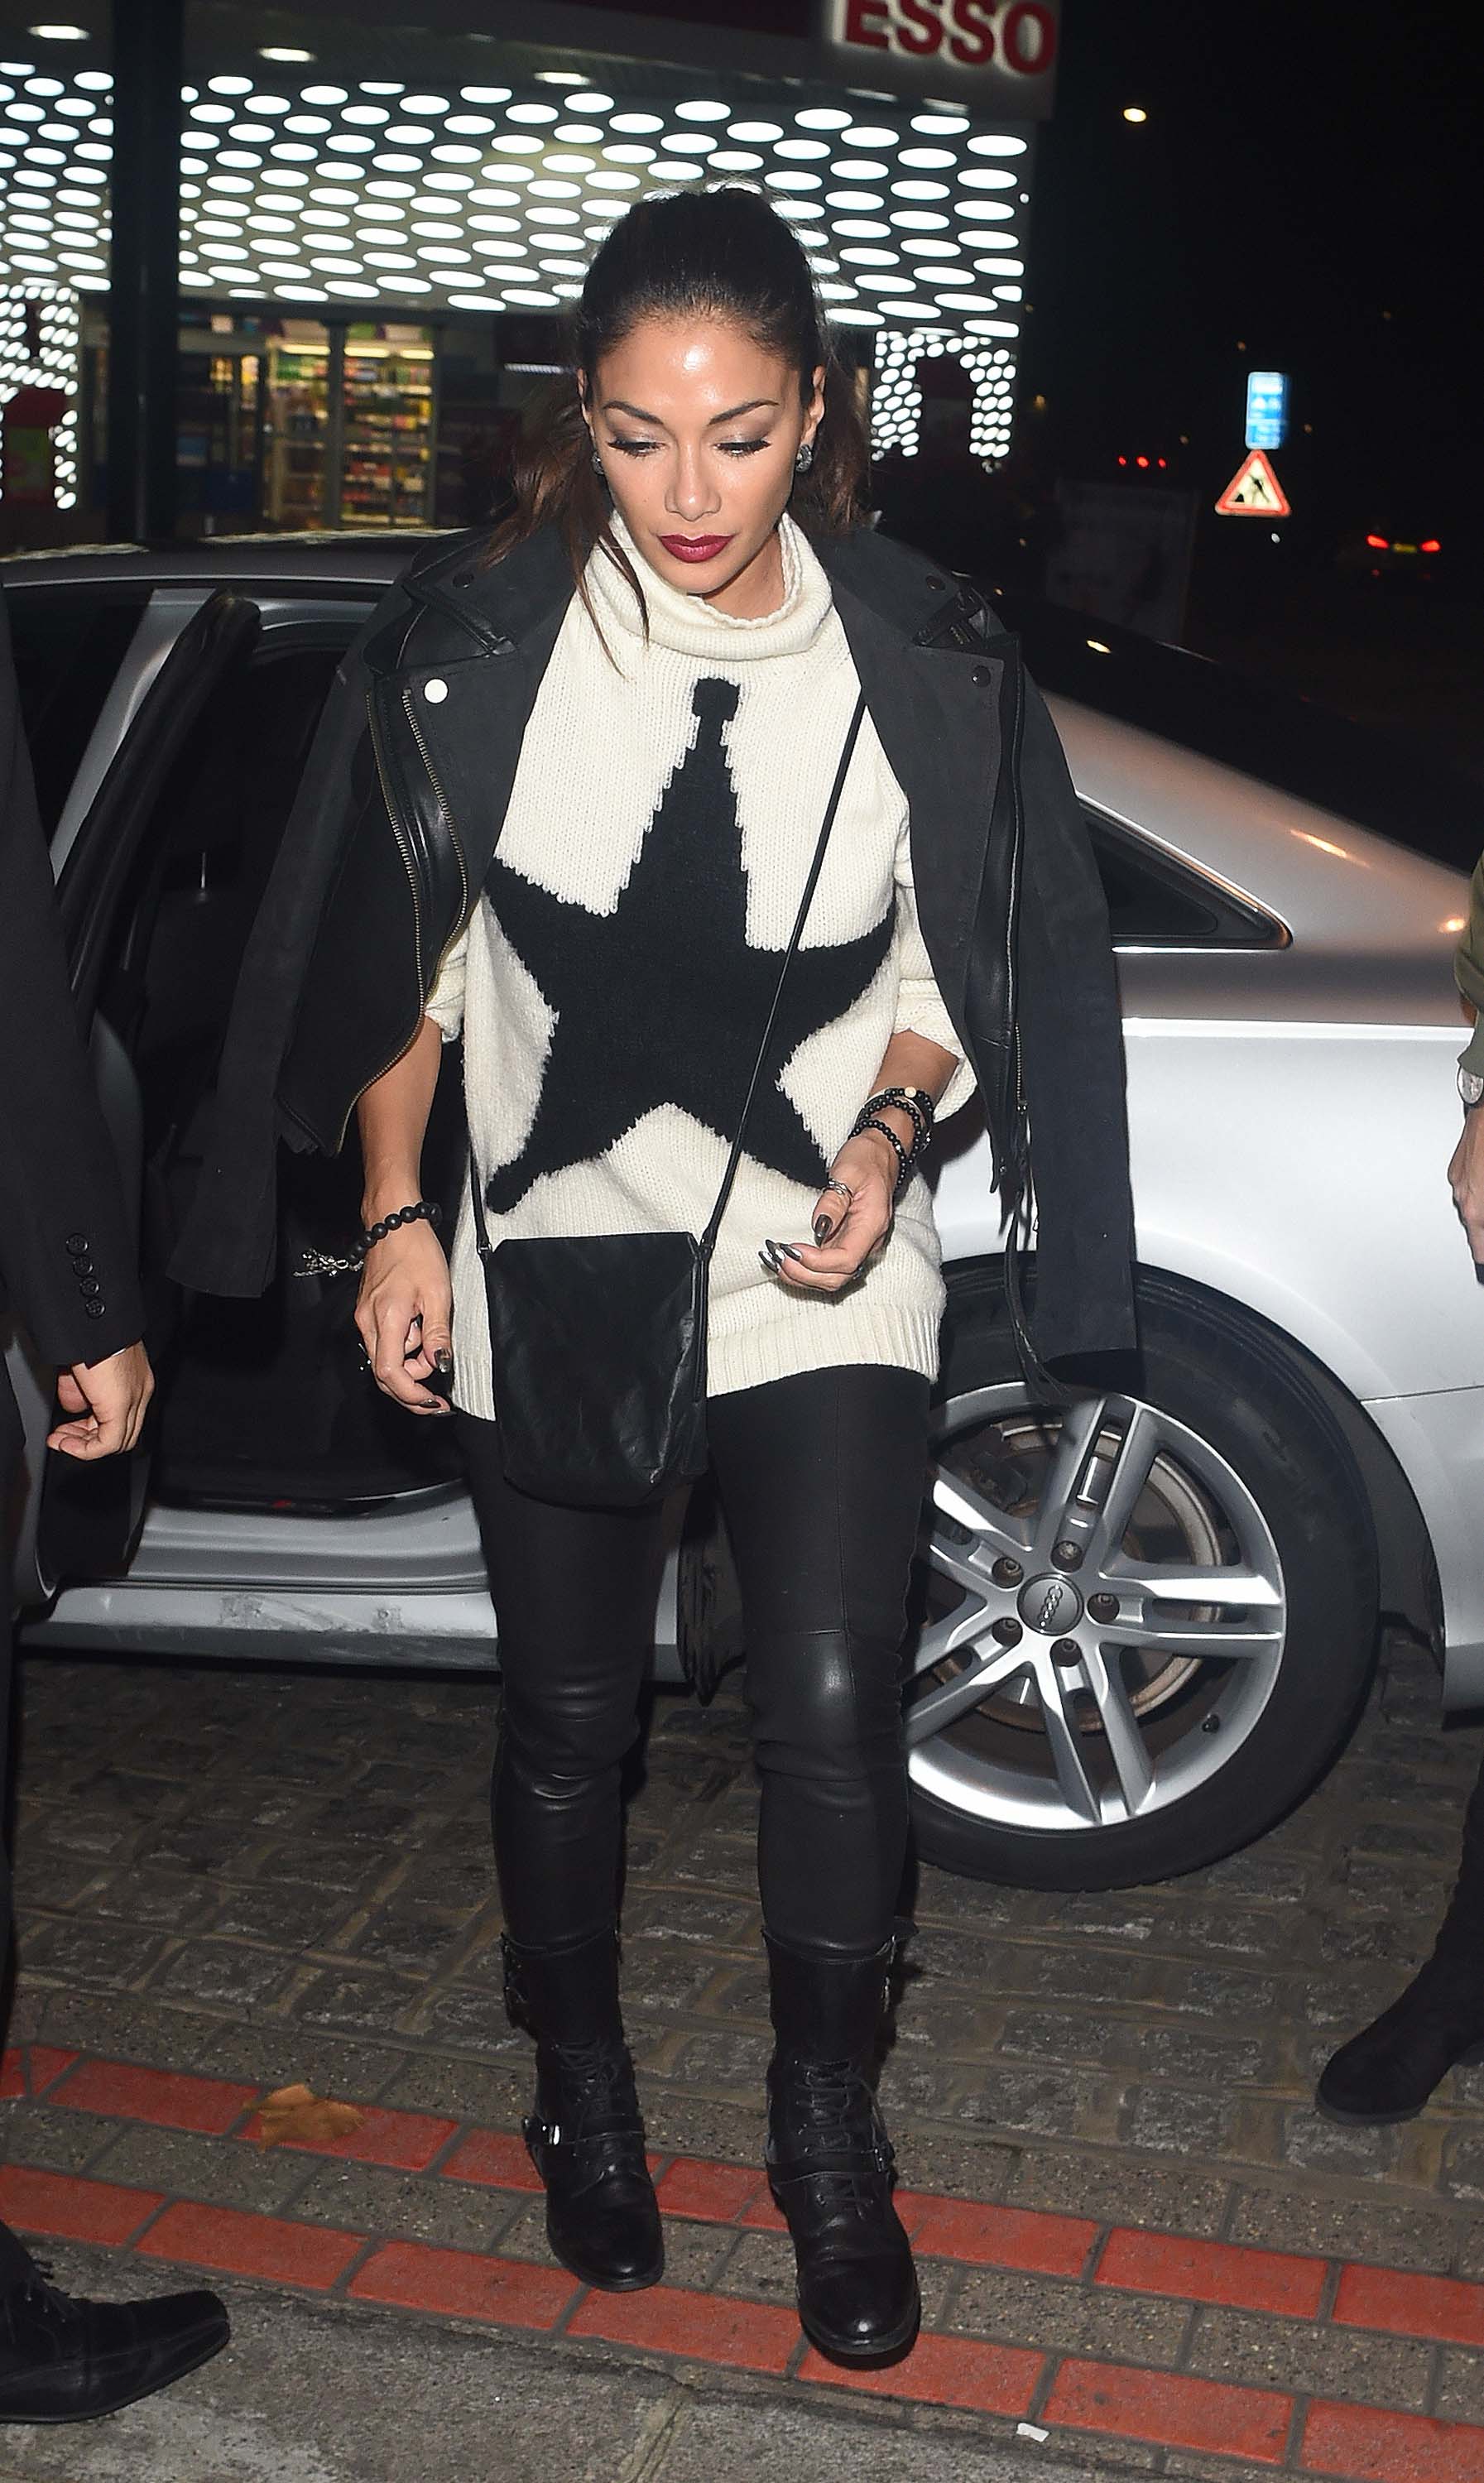 Nicole Scherzinger leaving the Groucho club